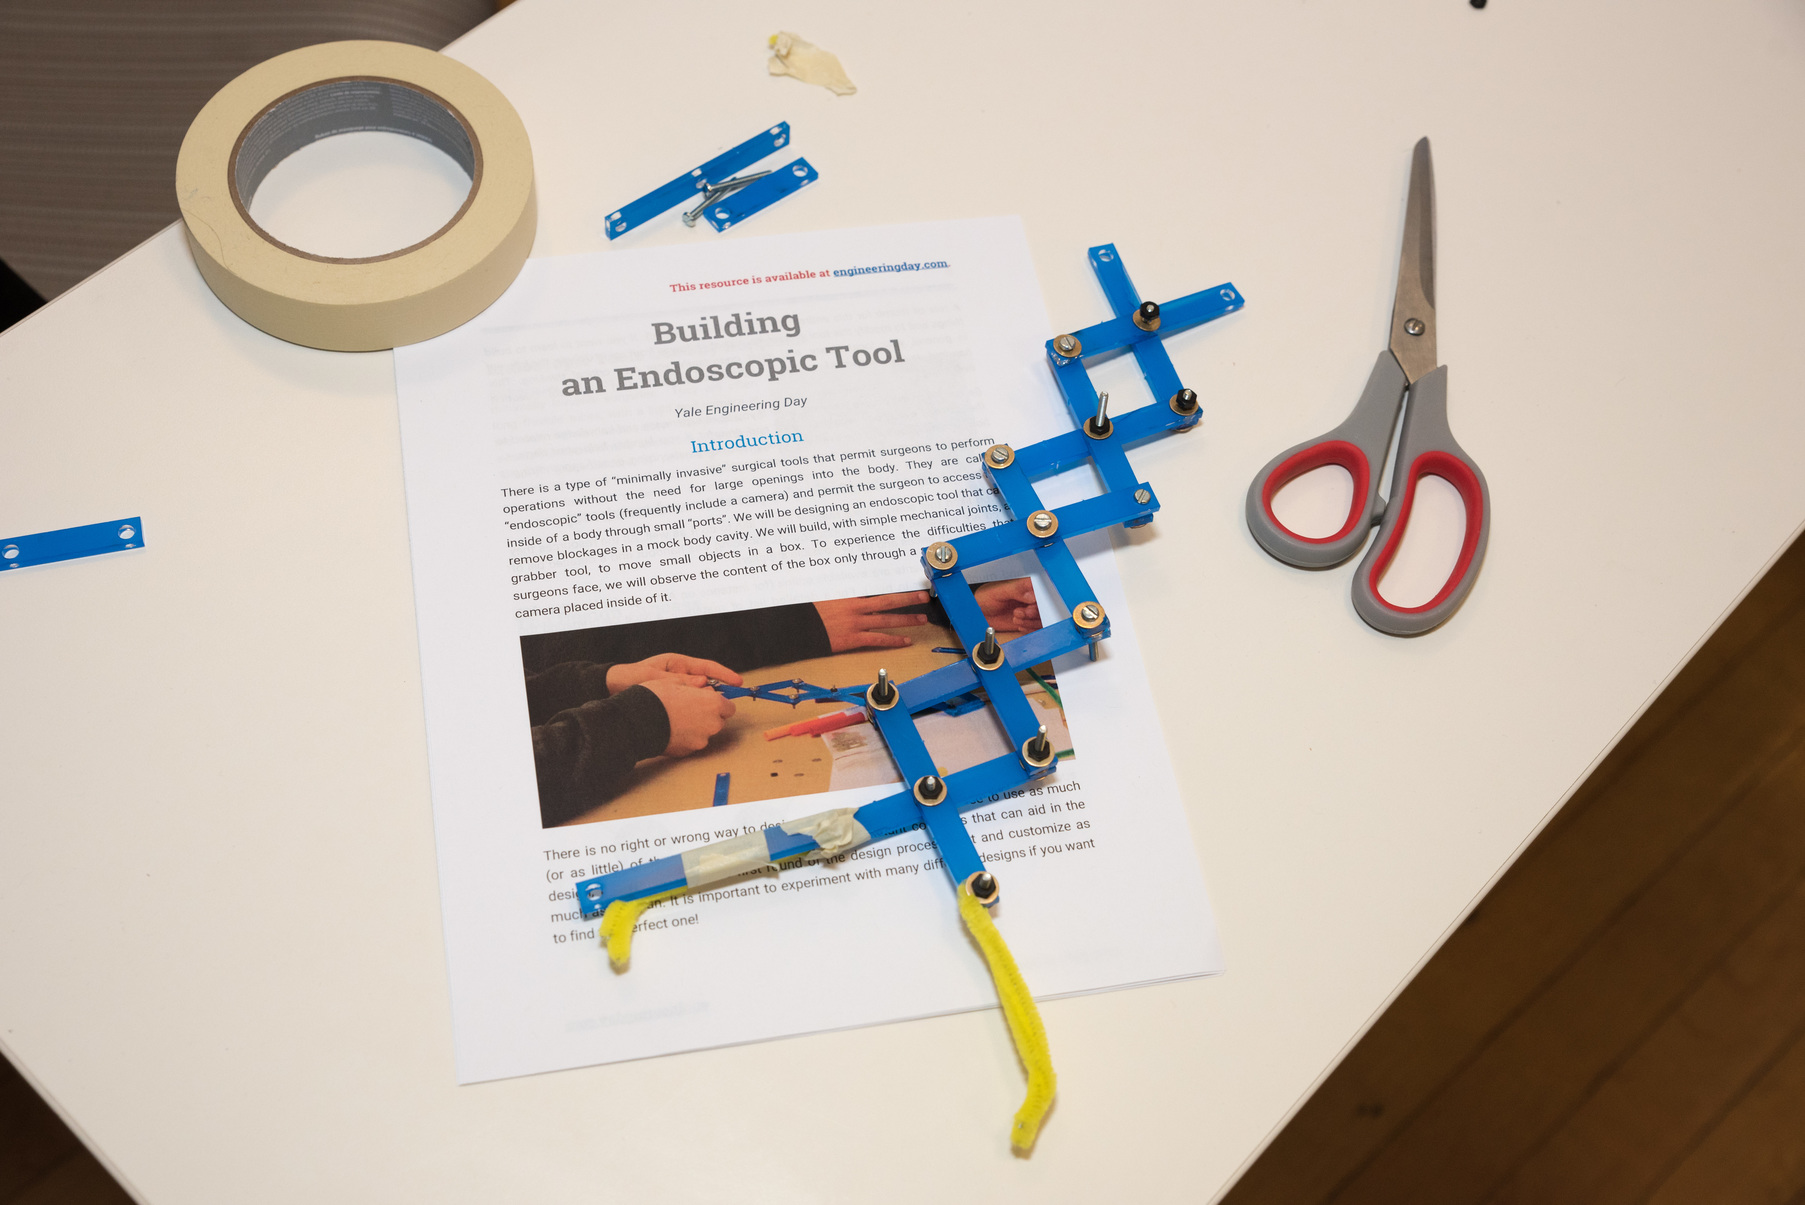 The endoscopic tool.